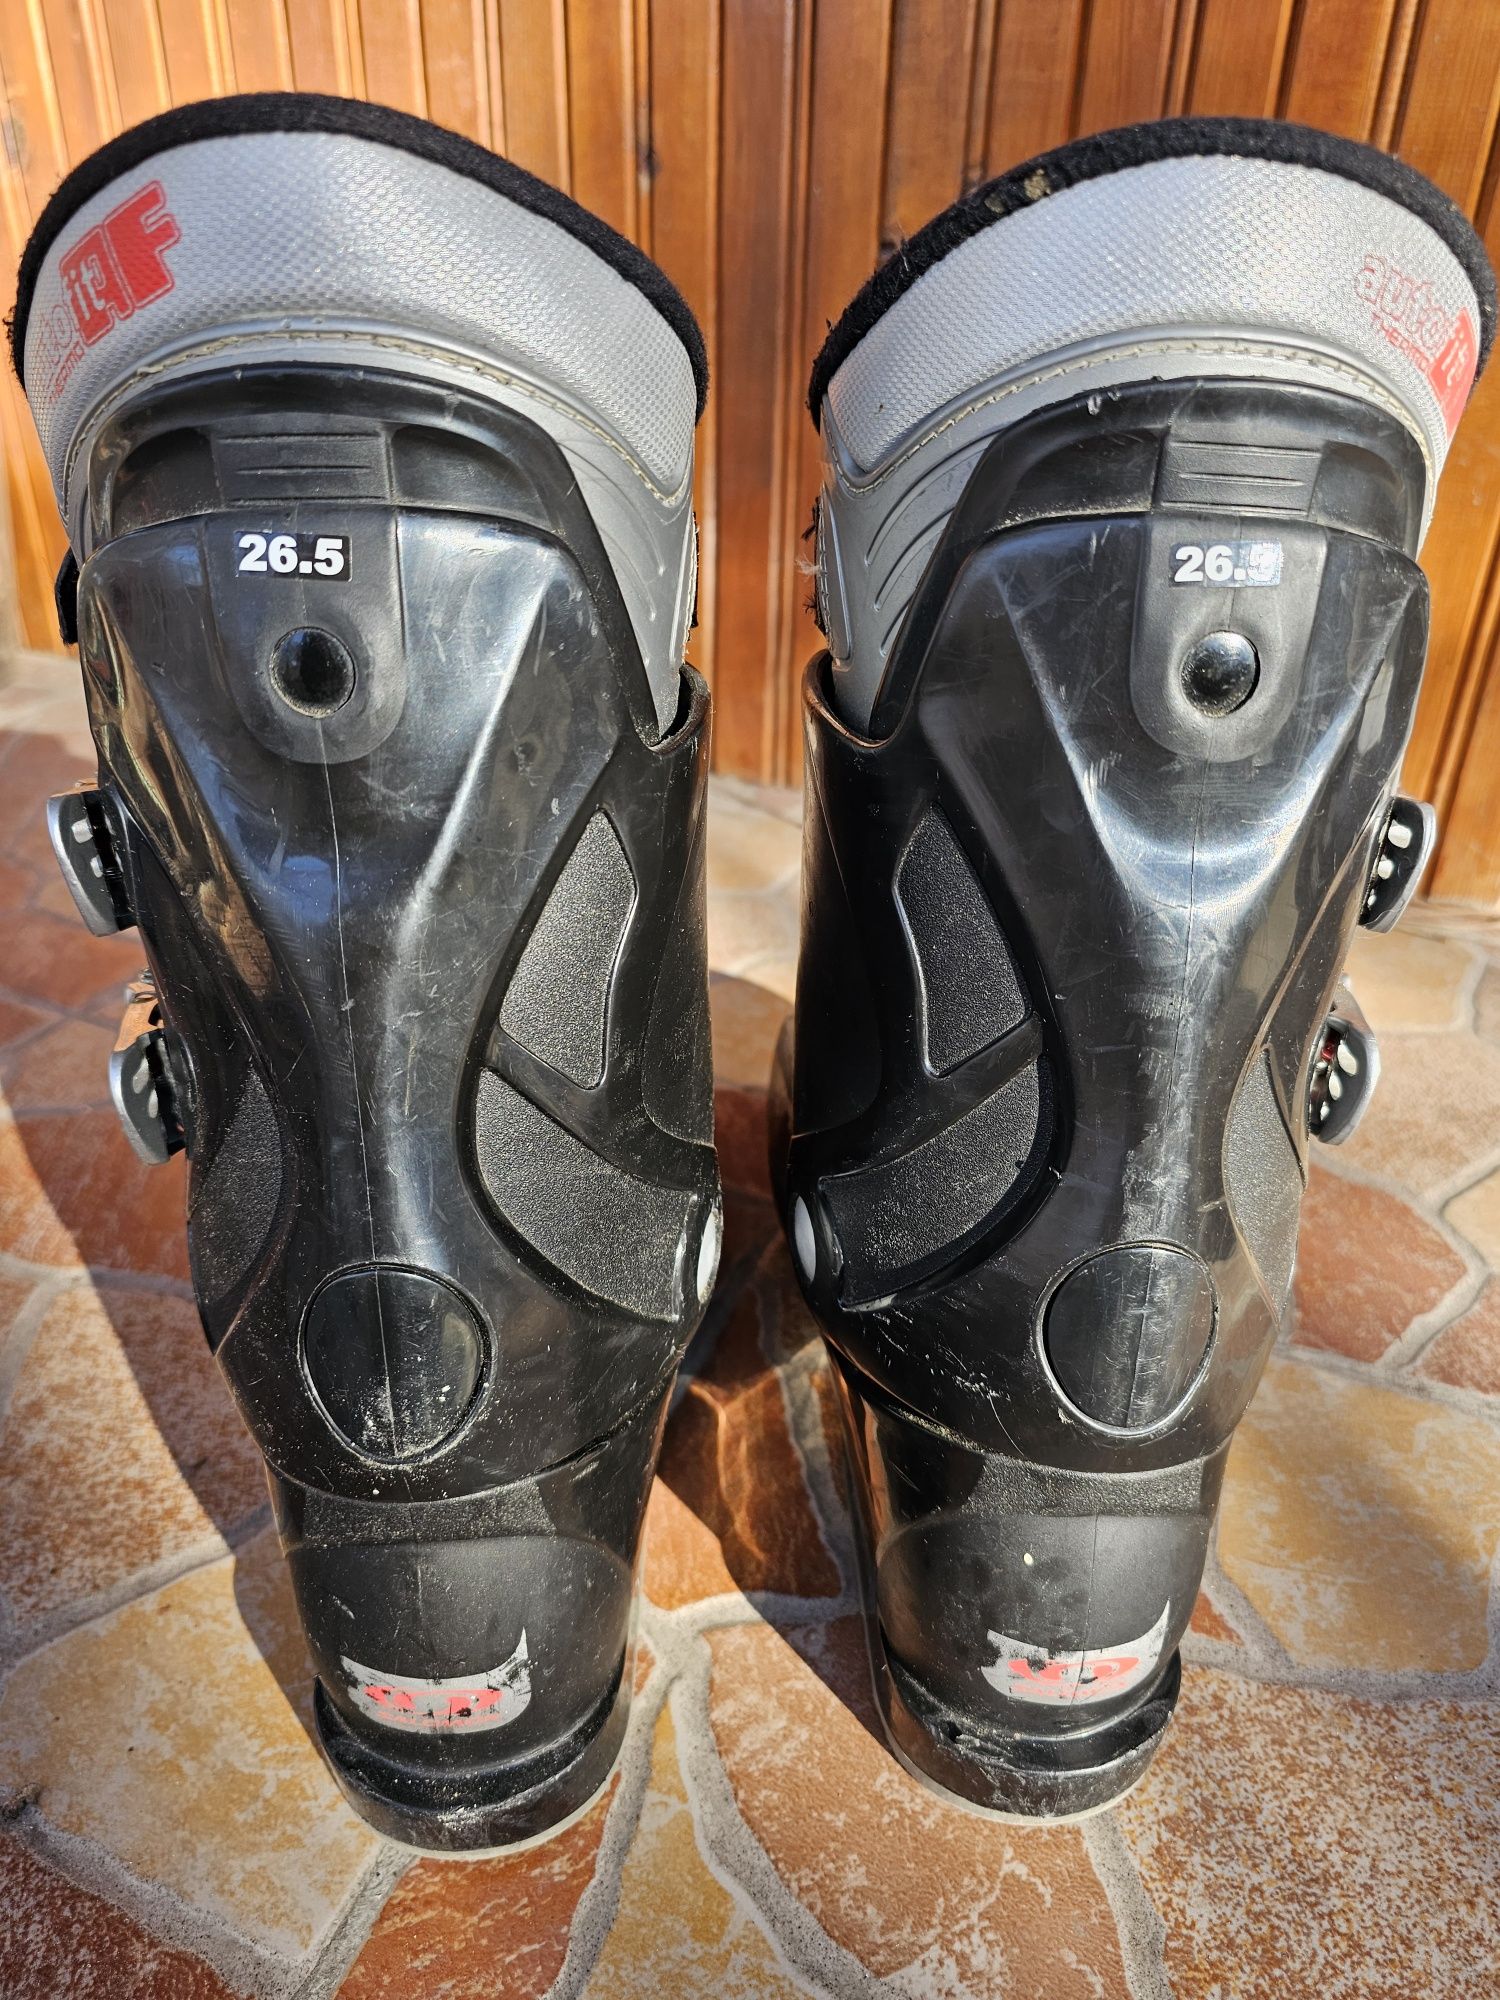 Ски обувки Salomon,, размери 38-39, и 36-37